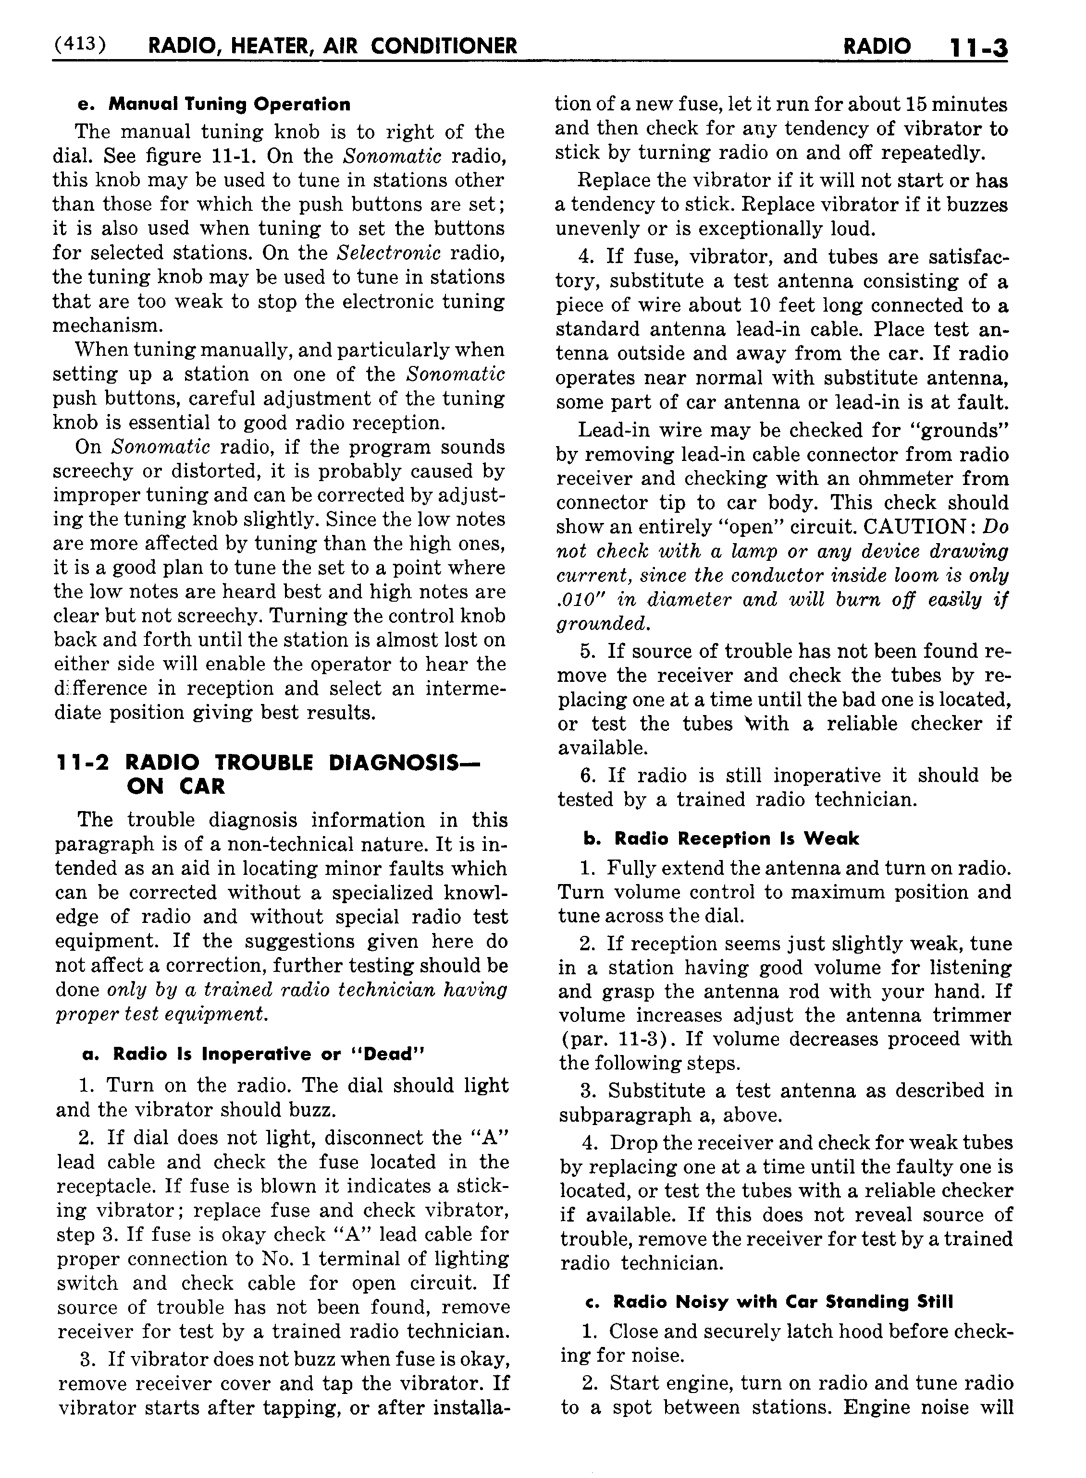 n_12 1954 Buick Shop Manual - Radio-Heat-AC-003-003.jpg